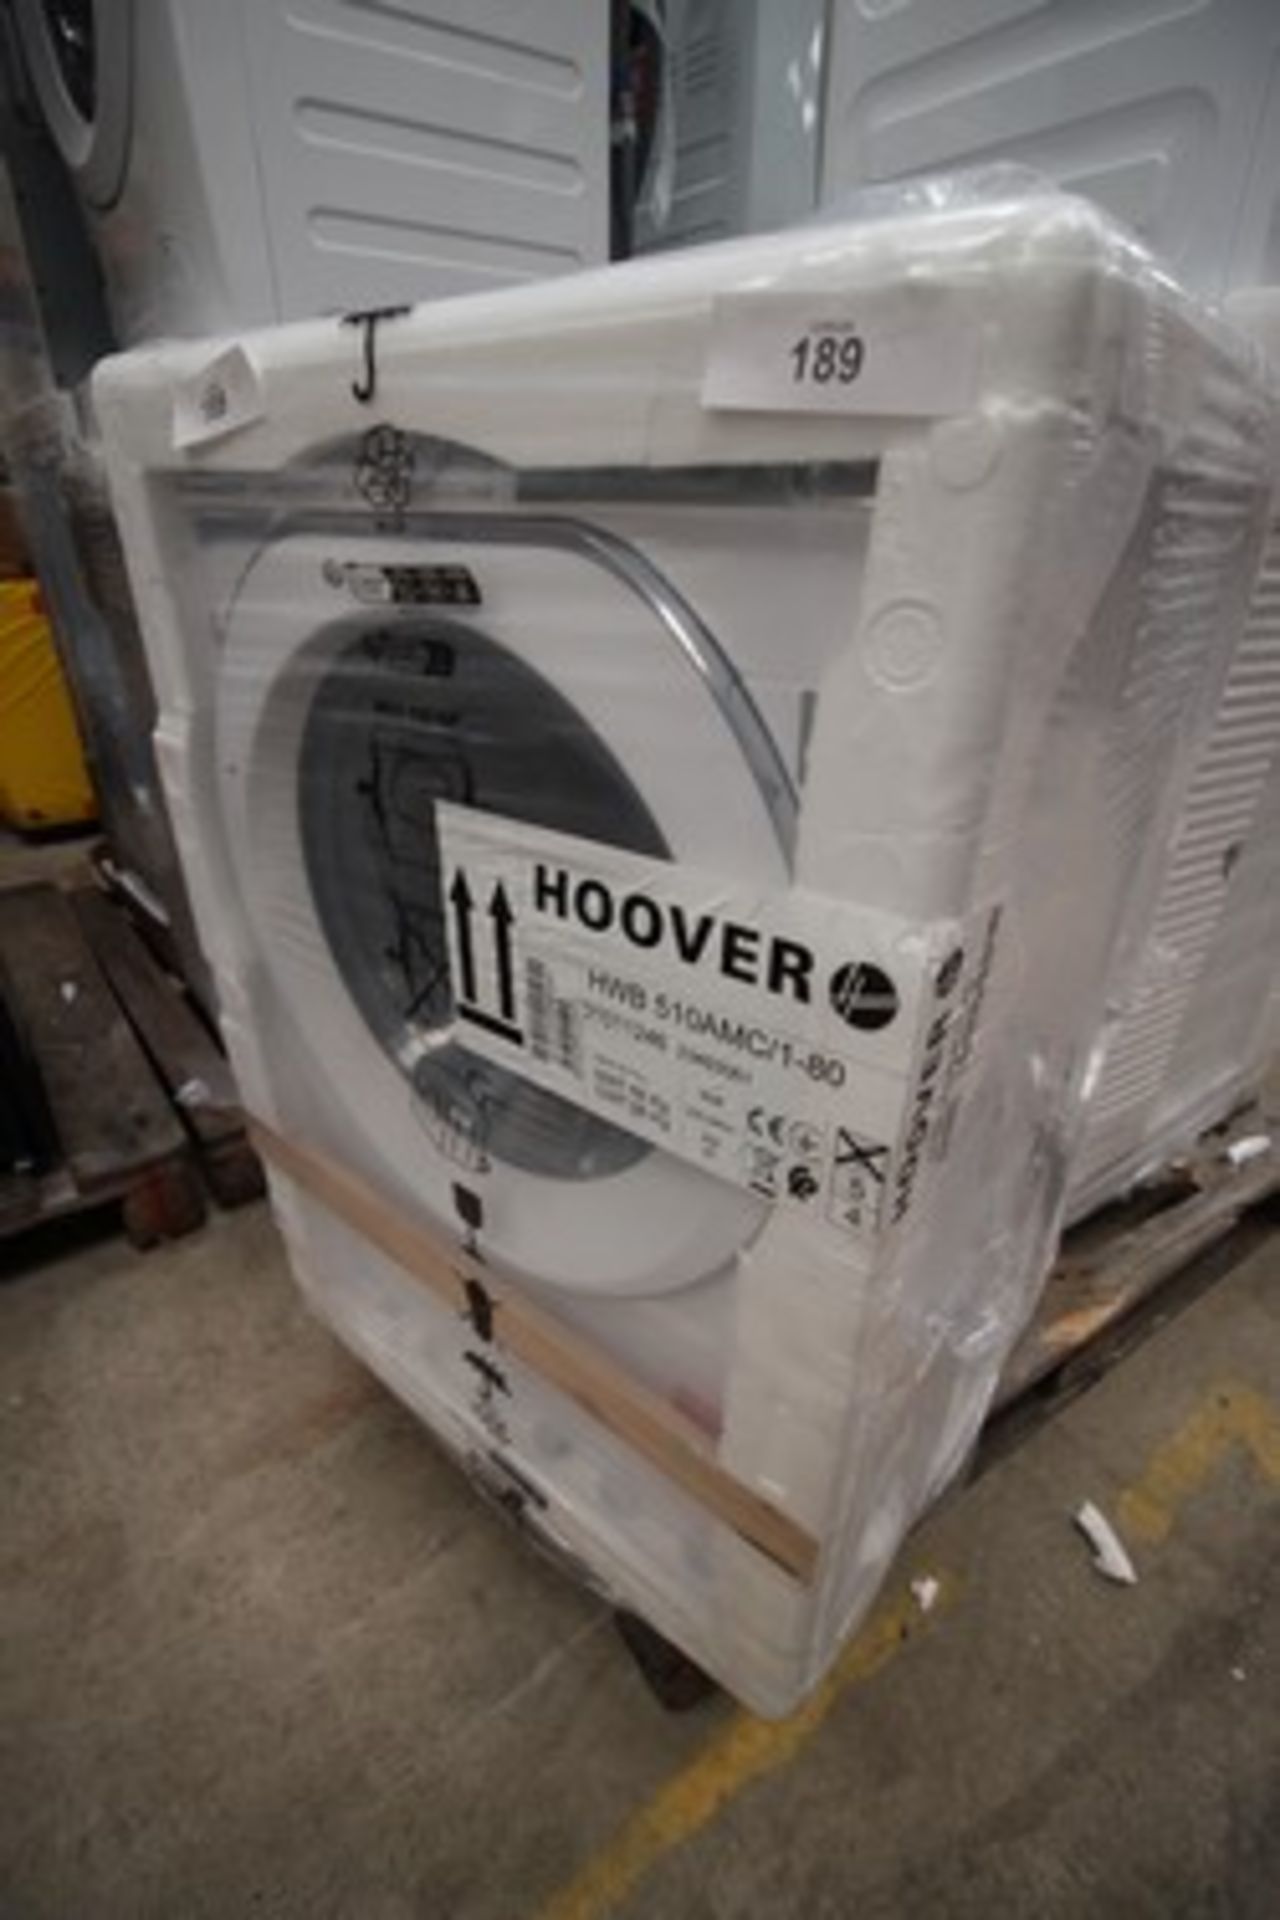 1 x Hoover H Wash 500 10kg washing machine, Model HWB510AMC/1-80, 2-3cm scratches on RHS panel - New